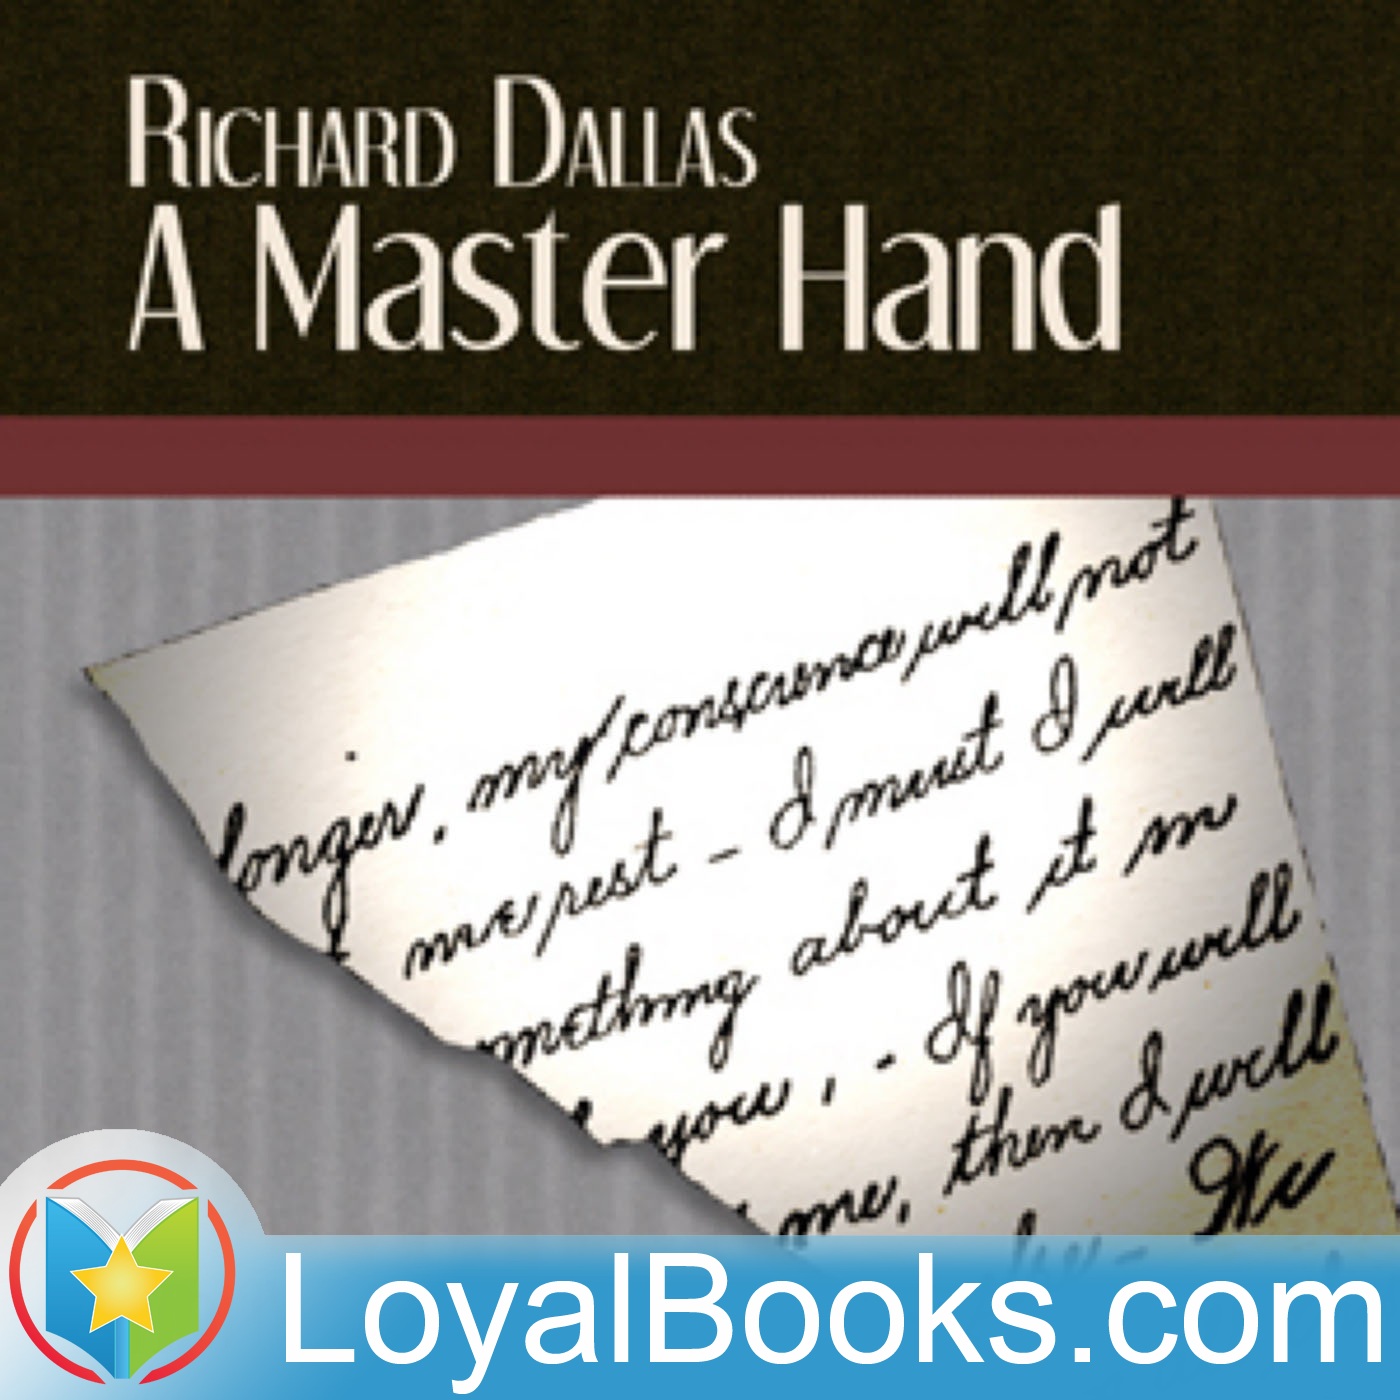 A Master Hand by Richard Dallas